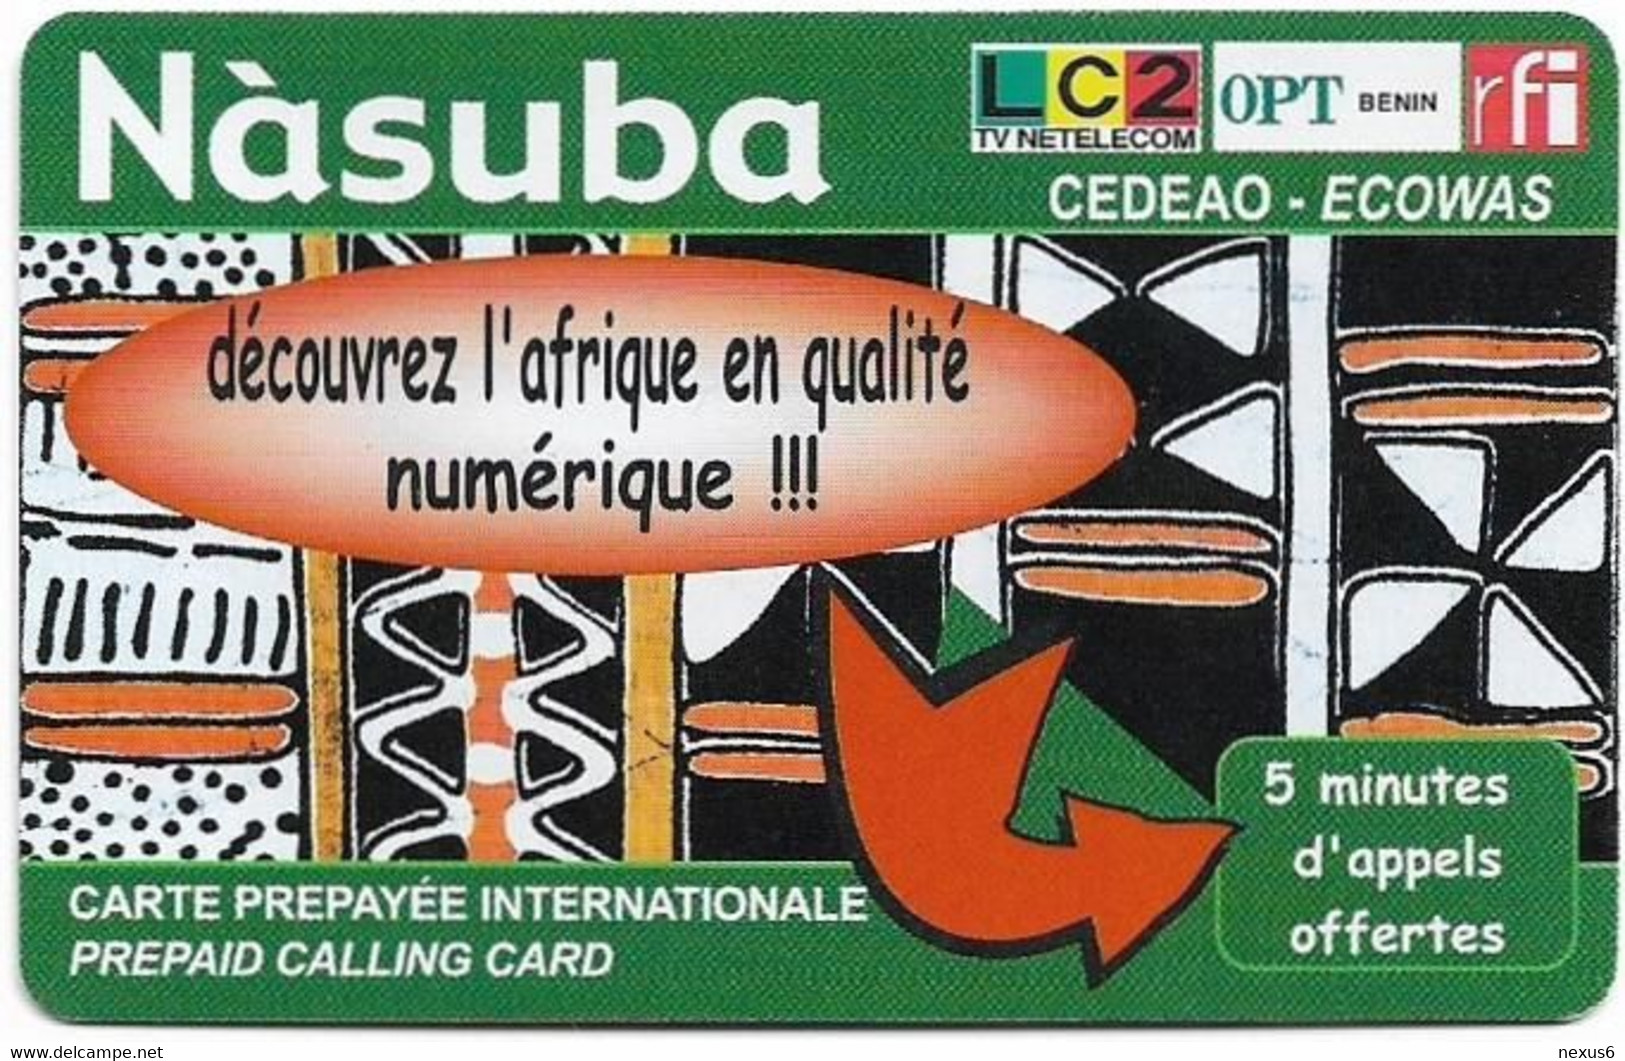 Benin - LC2 - Nàsuba - Cedeao-Ecowas (Green) - Exp.31.12.2003, Remote Mem. 5min., Used - Benin